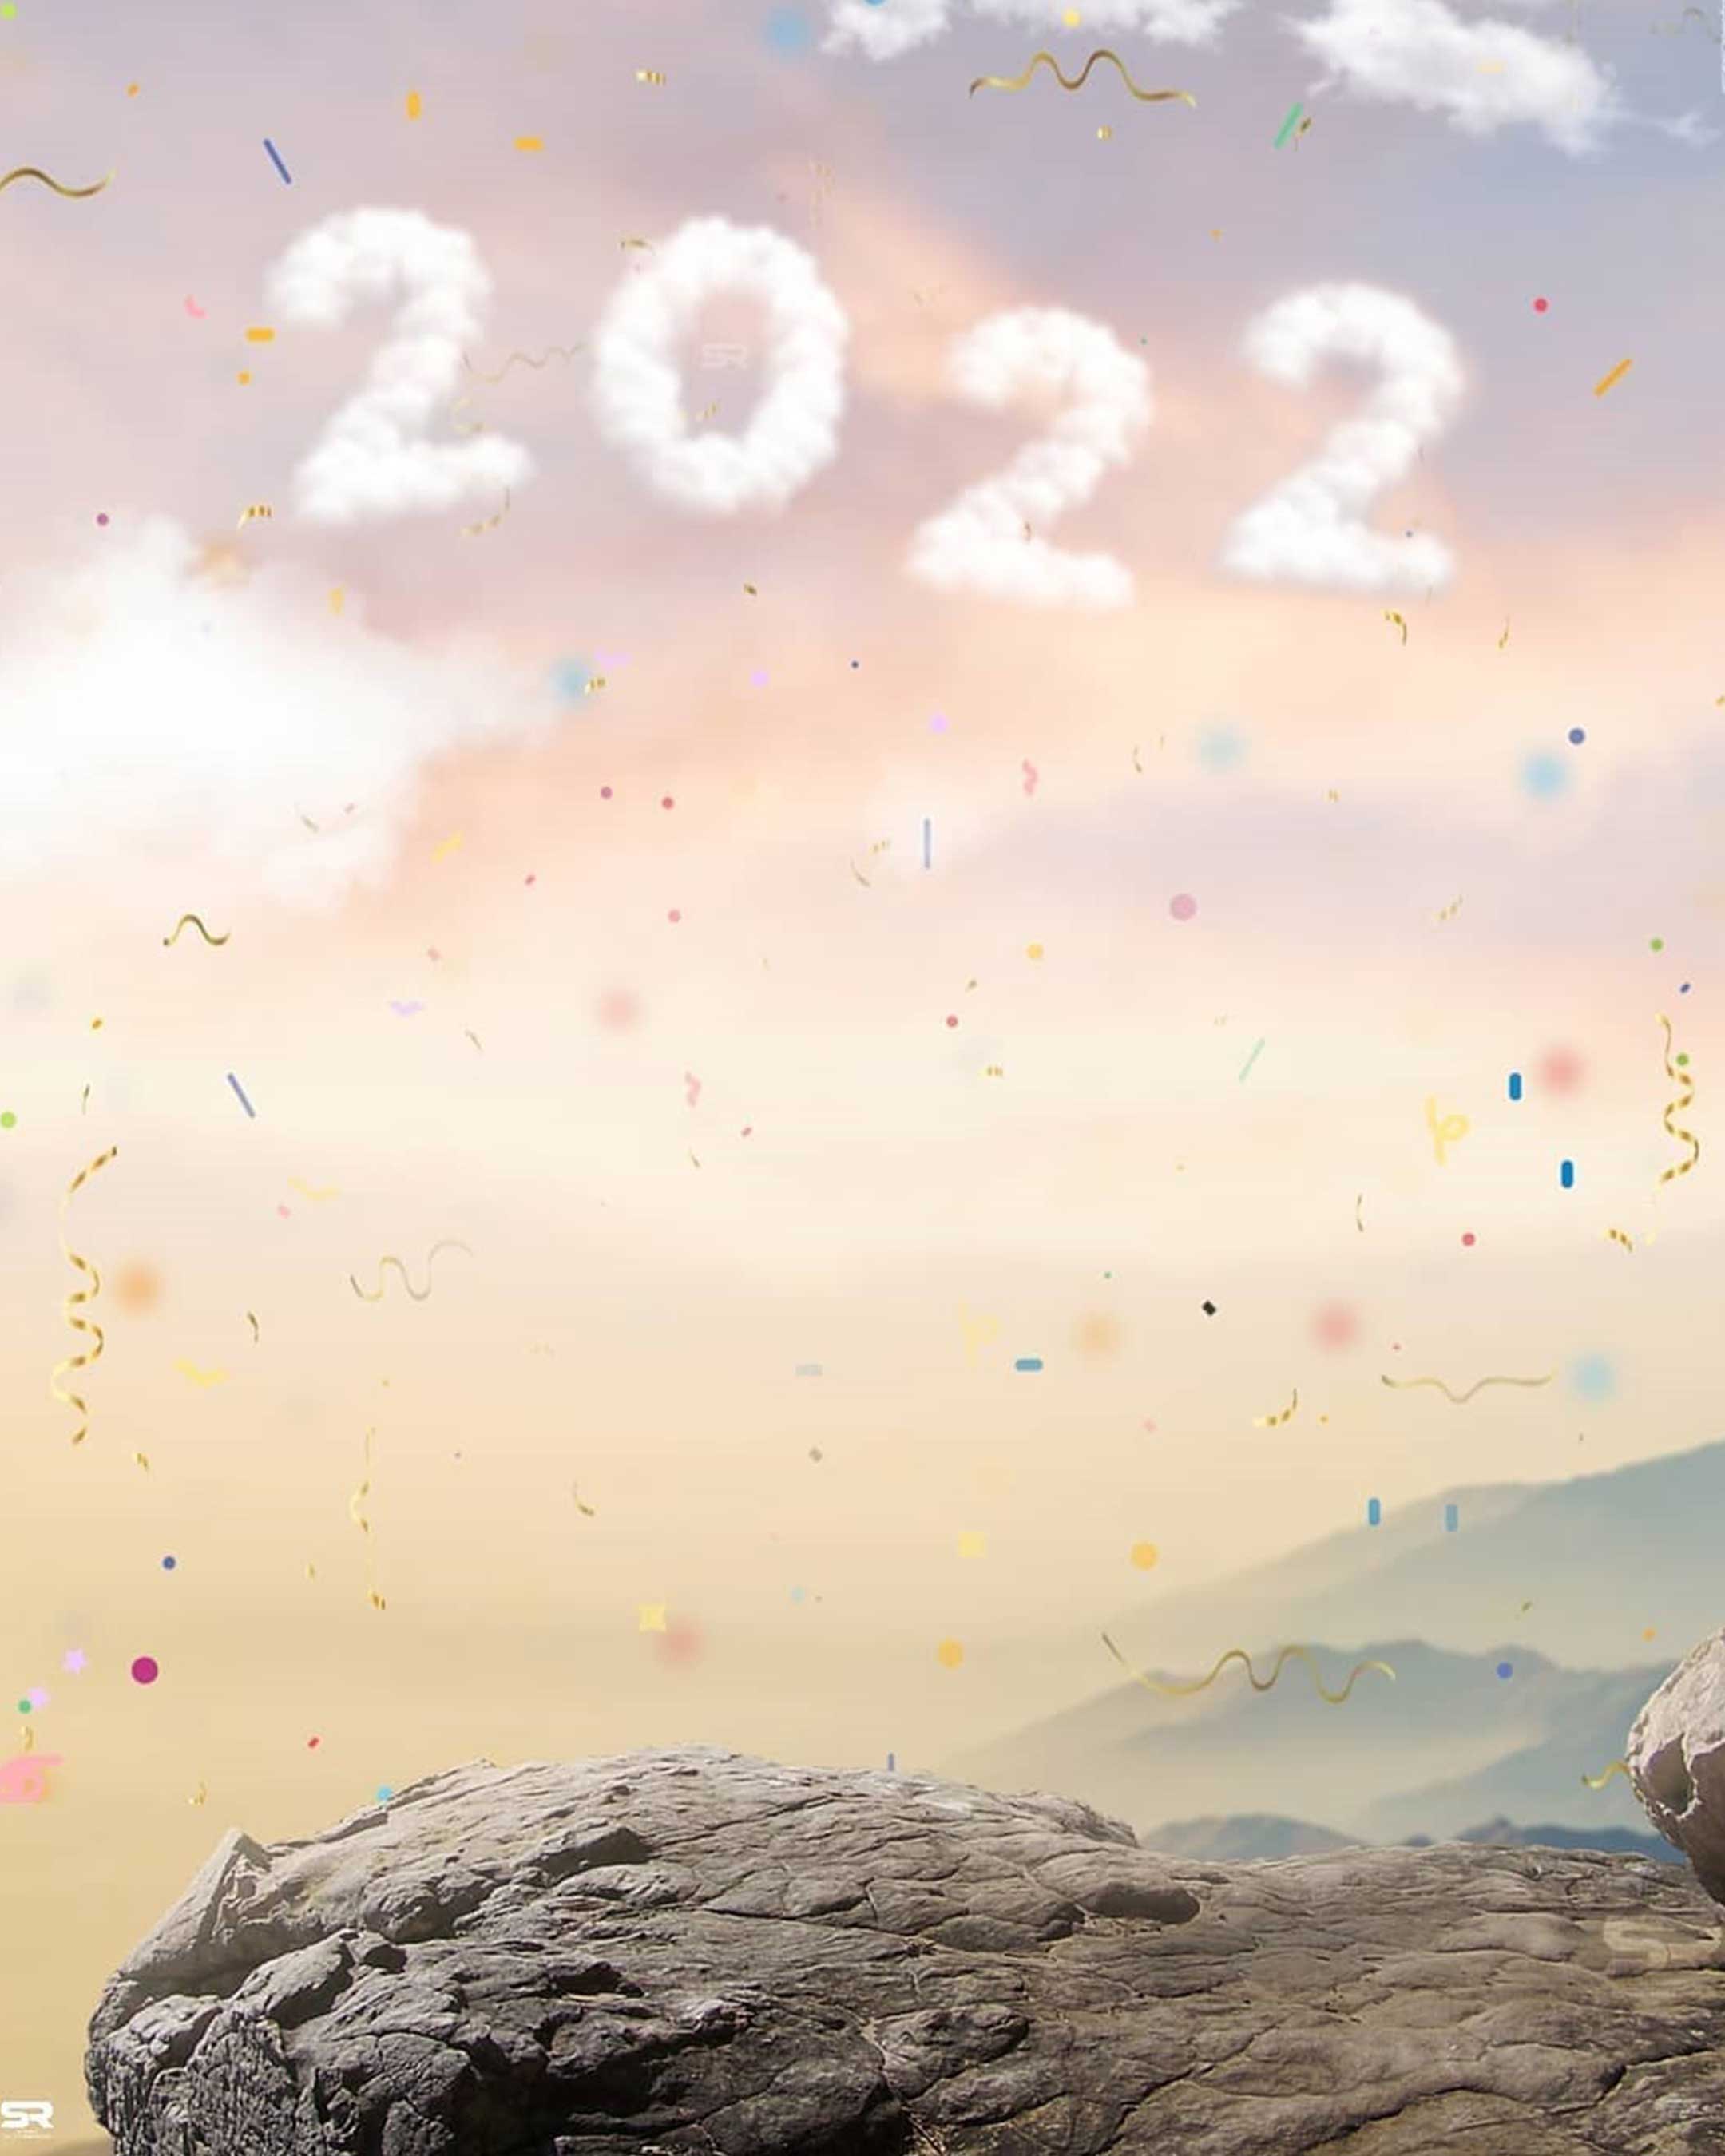 New Year 2022 PicsArt Background Free Stock Image